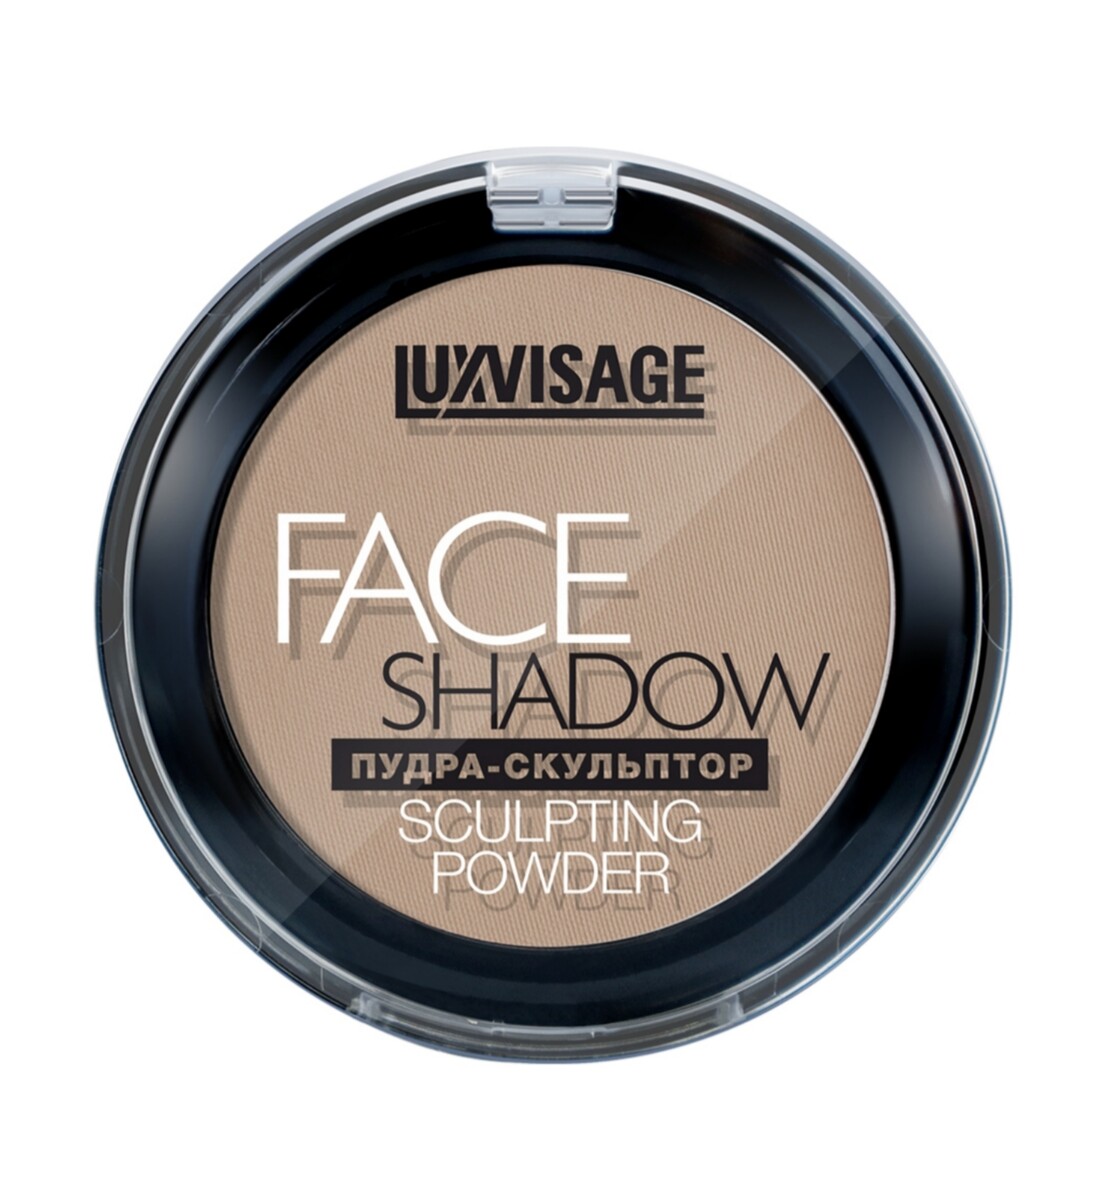 Luxvisage пудра-скульптор luxvisage face shadow, тон 10 warm beige football in sun and shadow